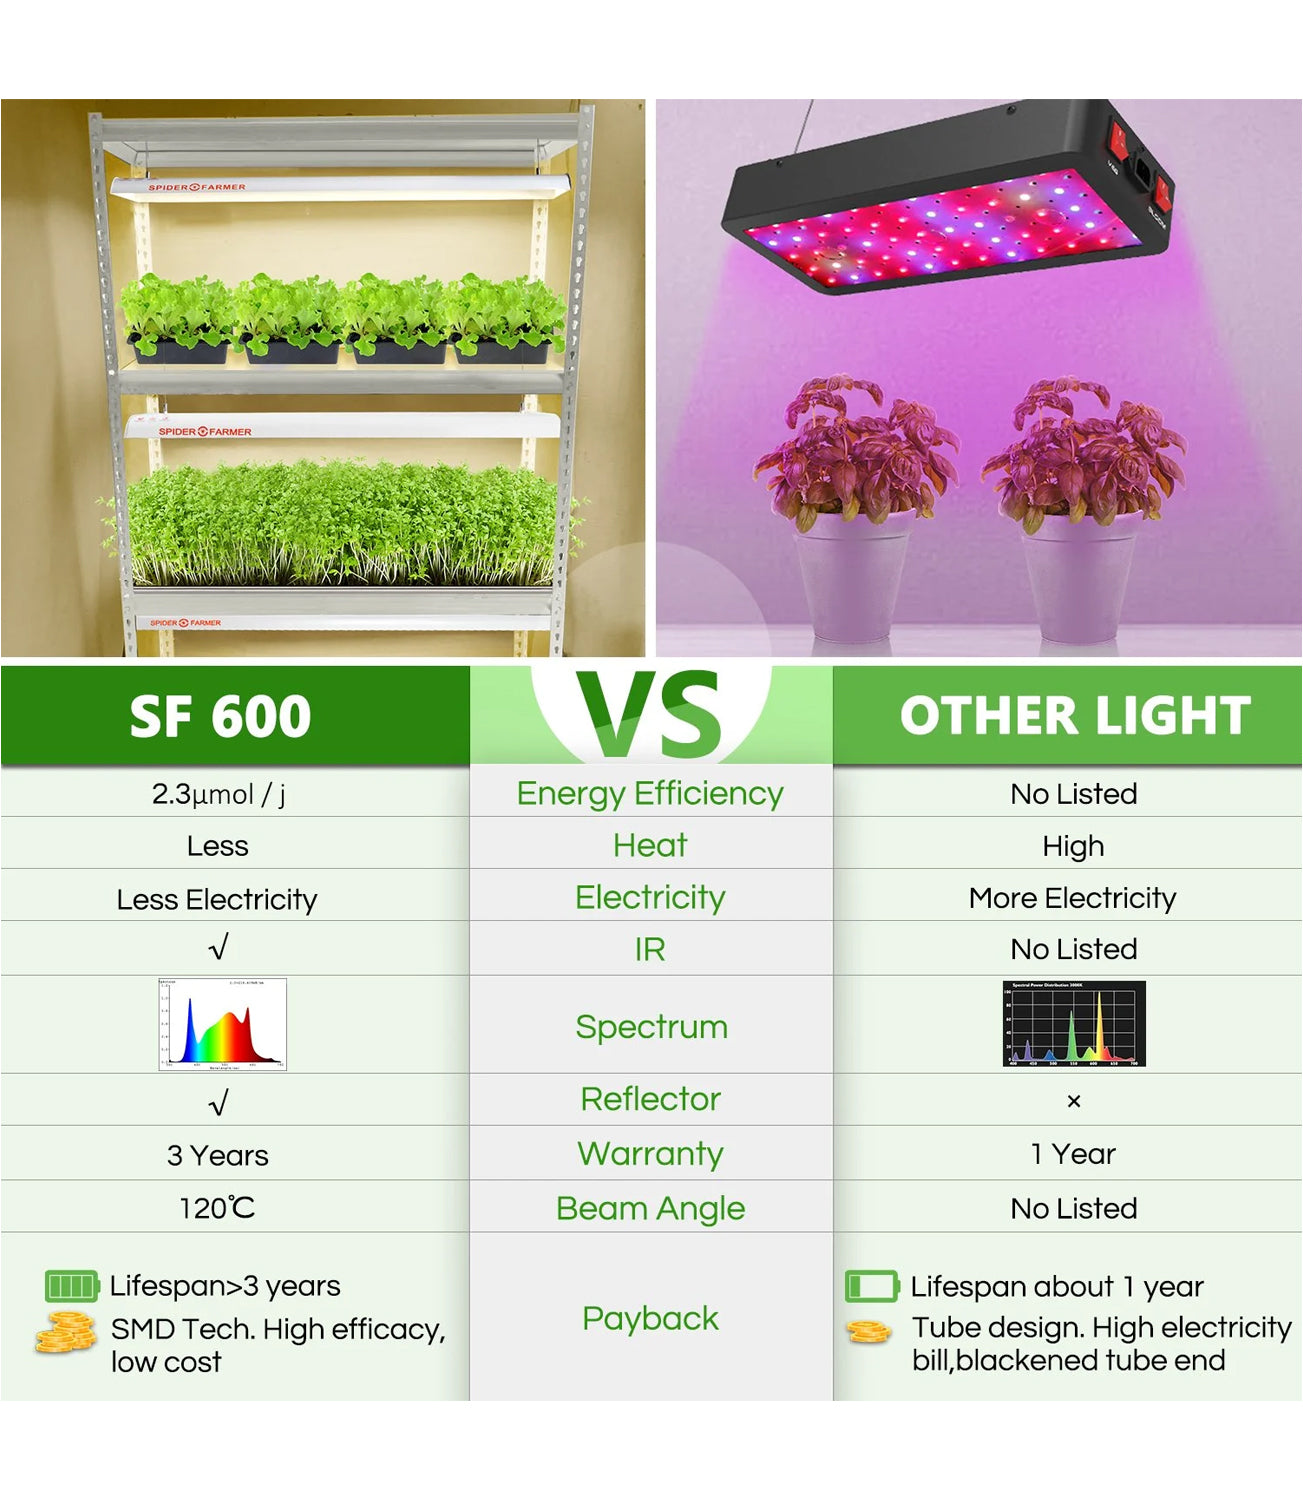 Spider Farmer SF600 74W LED Grow Light